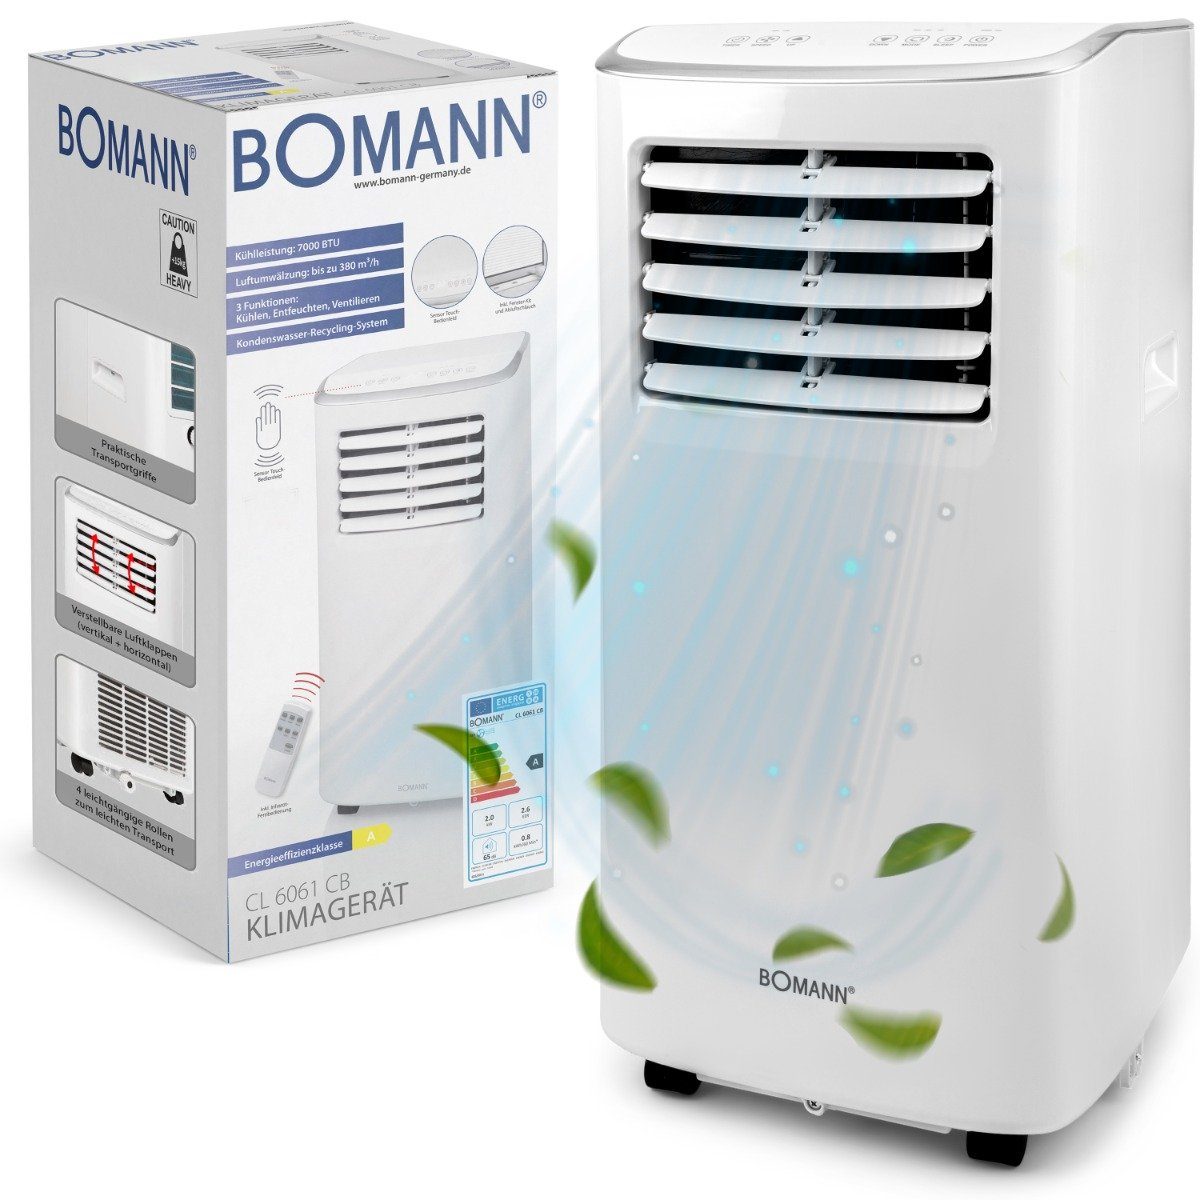 BOMANN 3-in-1-Klimagerät BTU, Timer, 7000 CB, LED-Display CL 6061